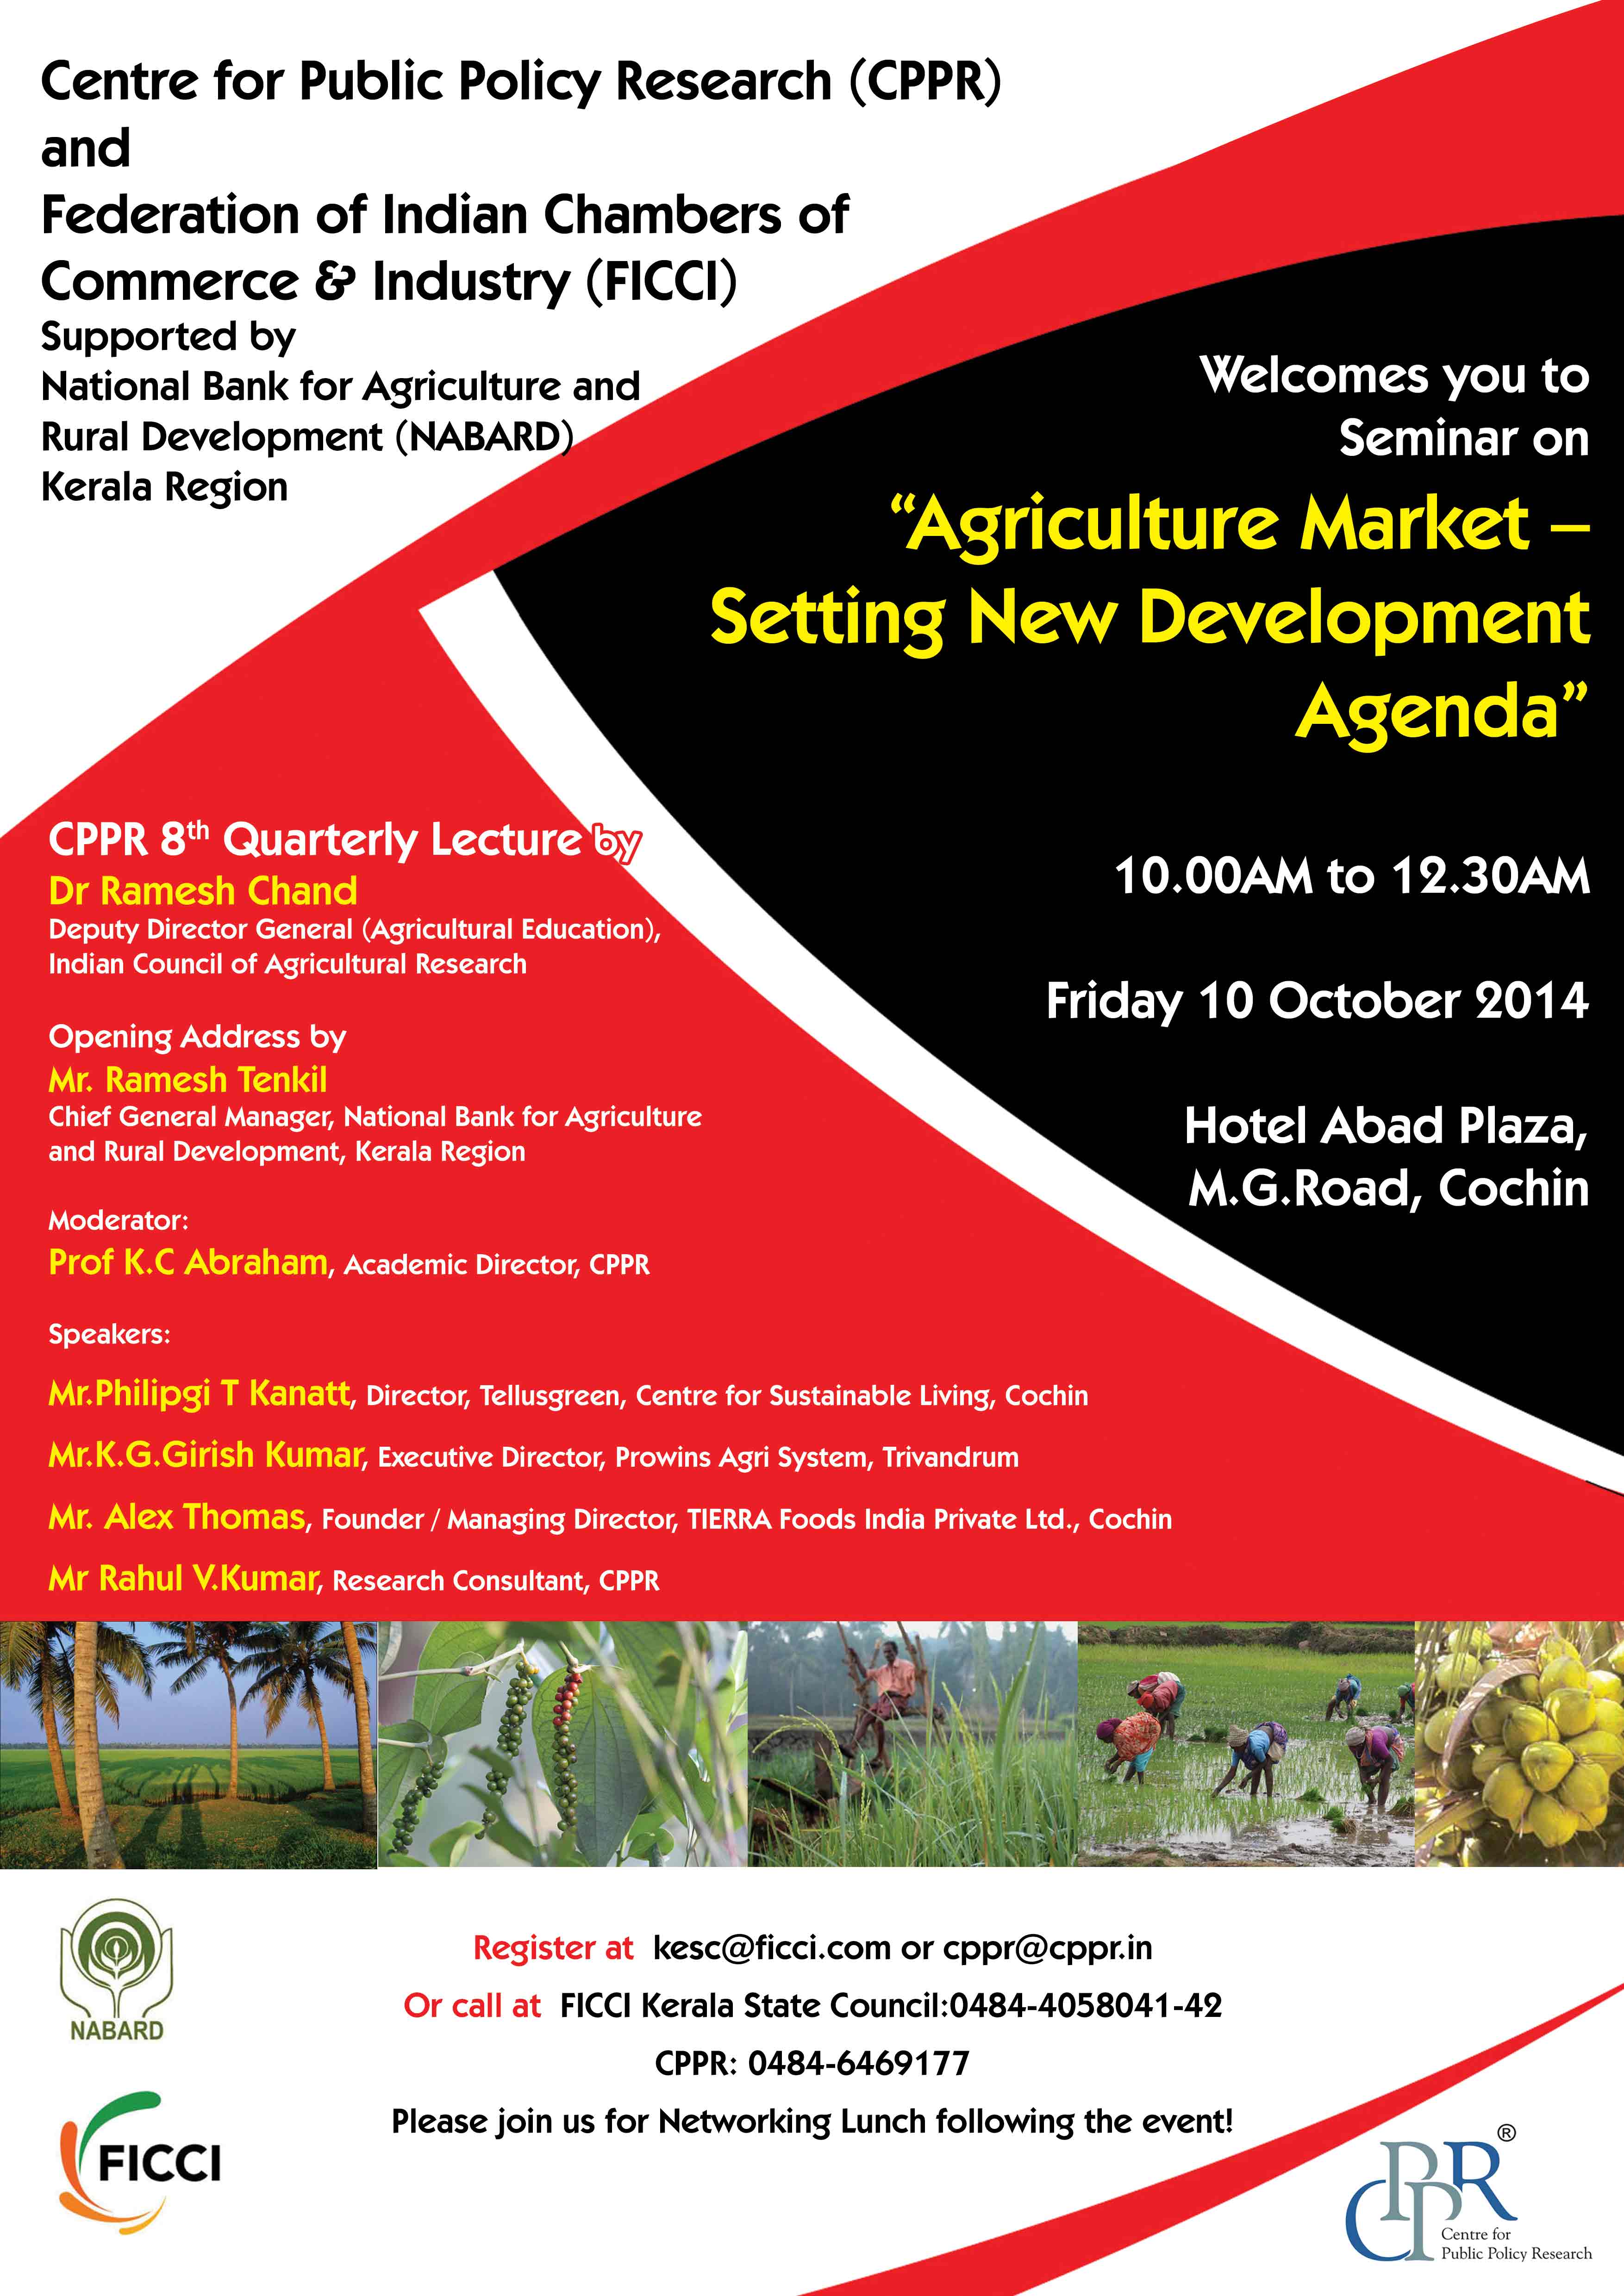 Agriculture Market - Setting New Development Agenda